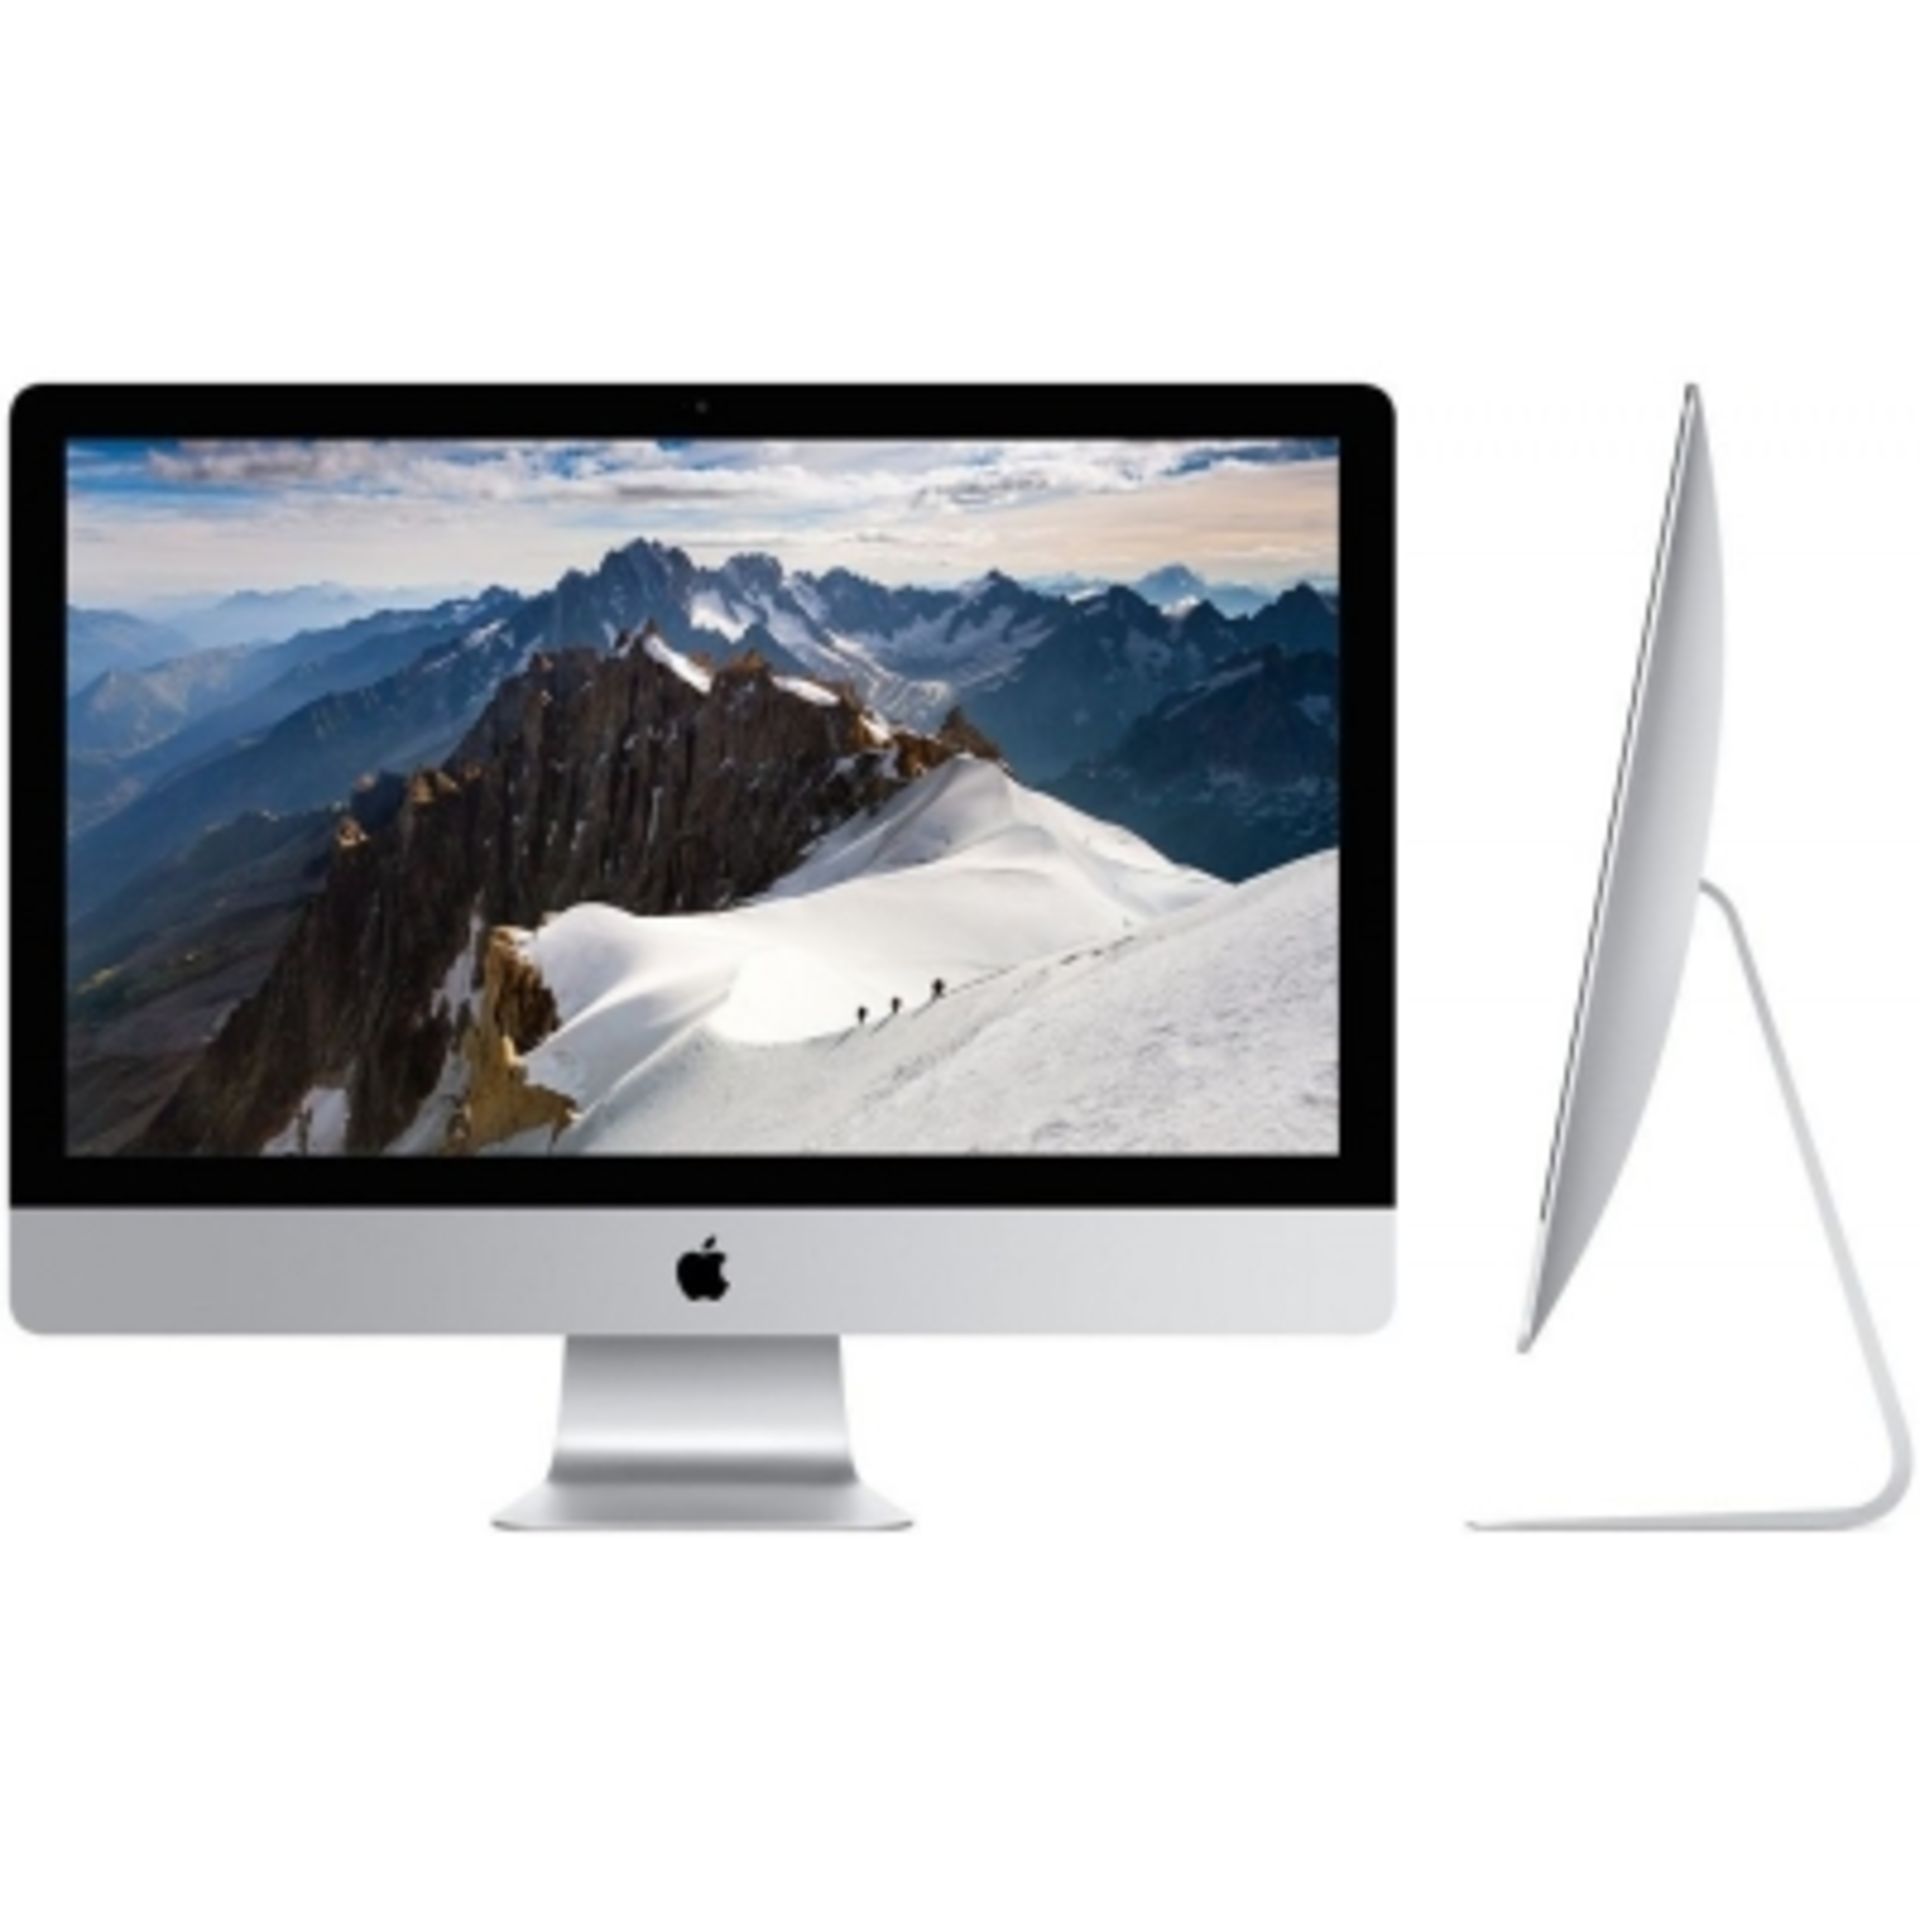 Apple iMac 27” A1419 Slim (2013) Intel Core i5 Quad Core 8GB Memory 256GB SSD WiFi Office #2